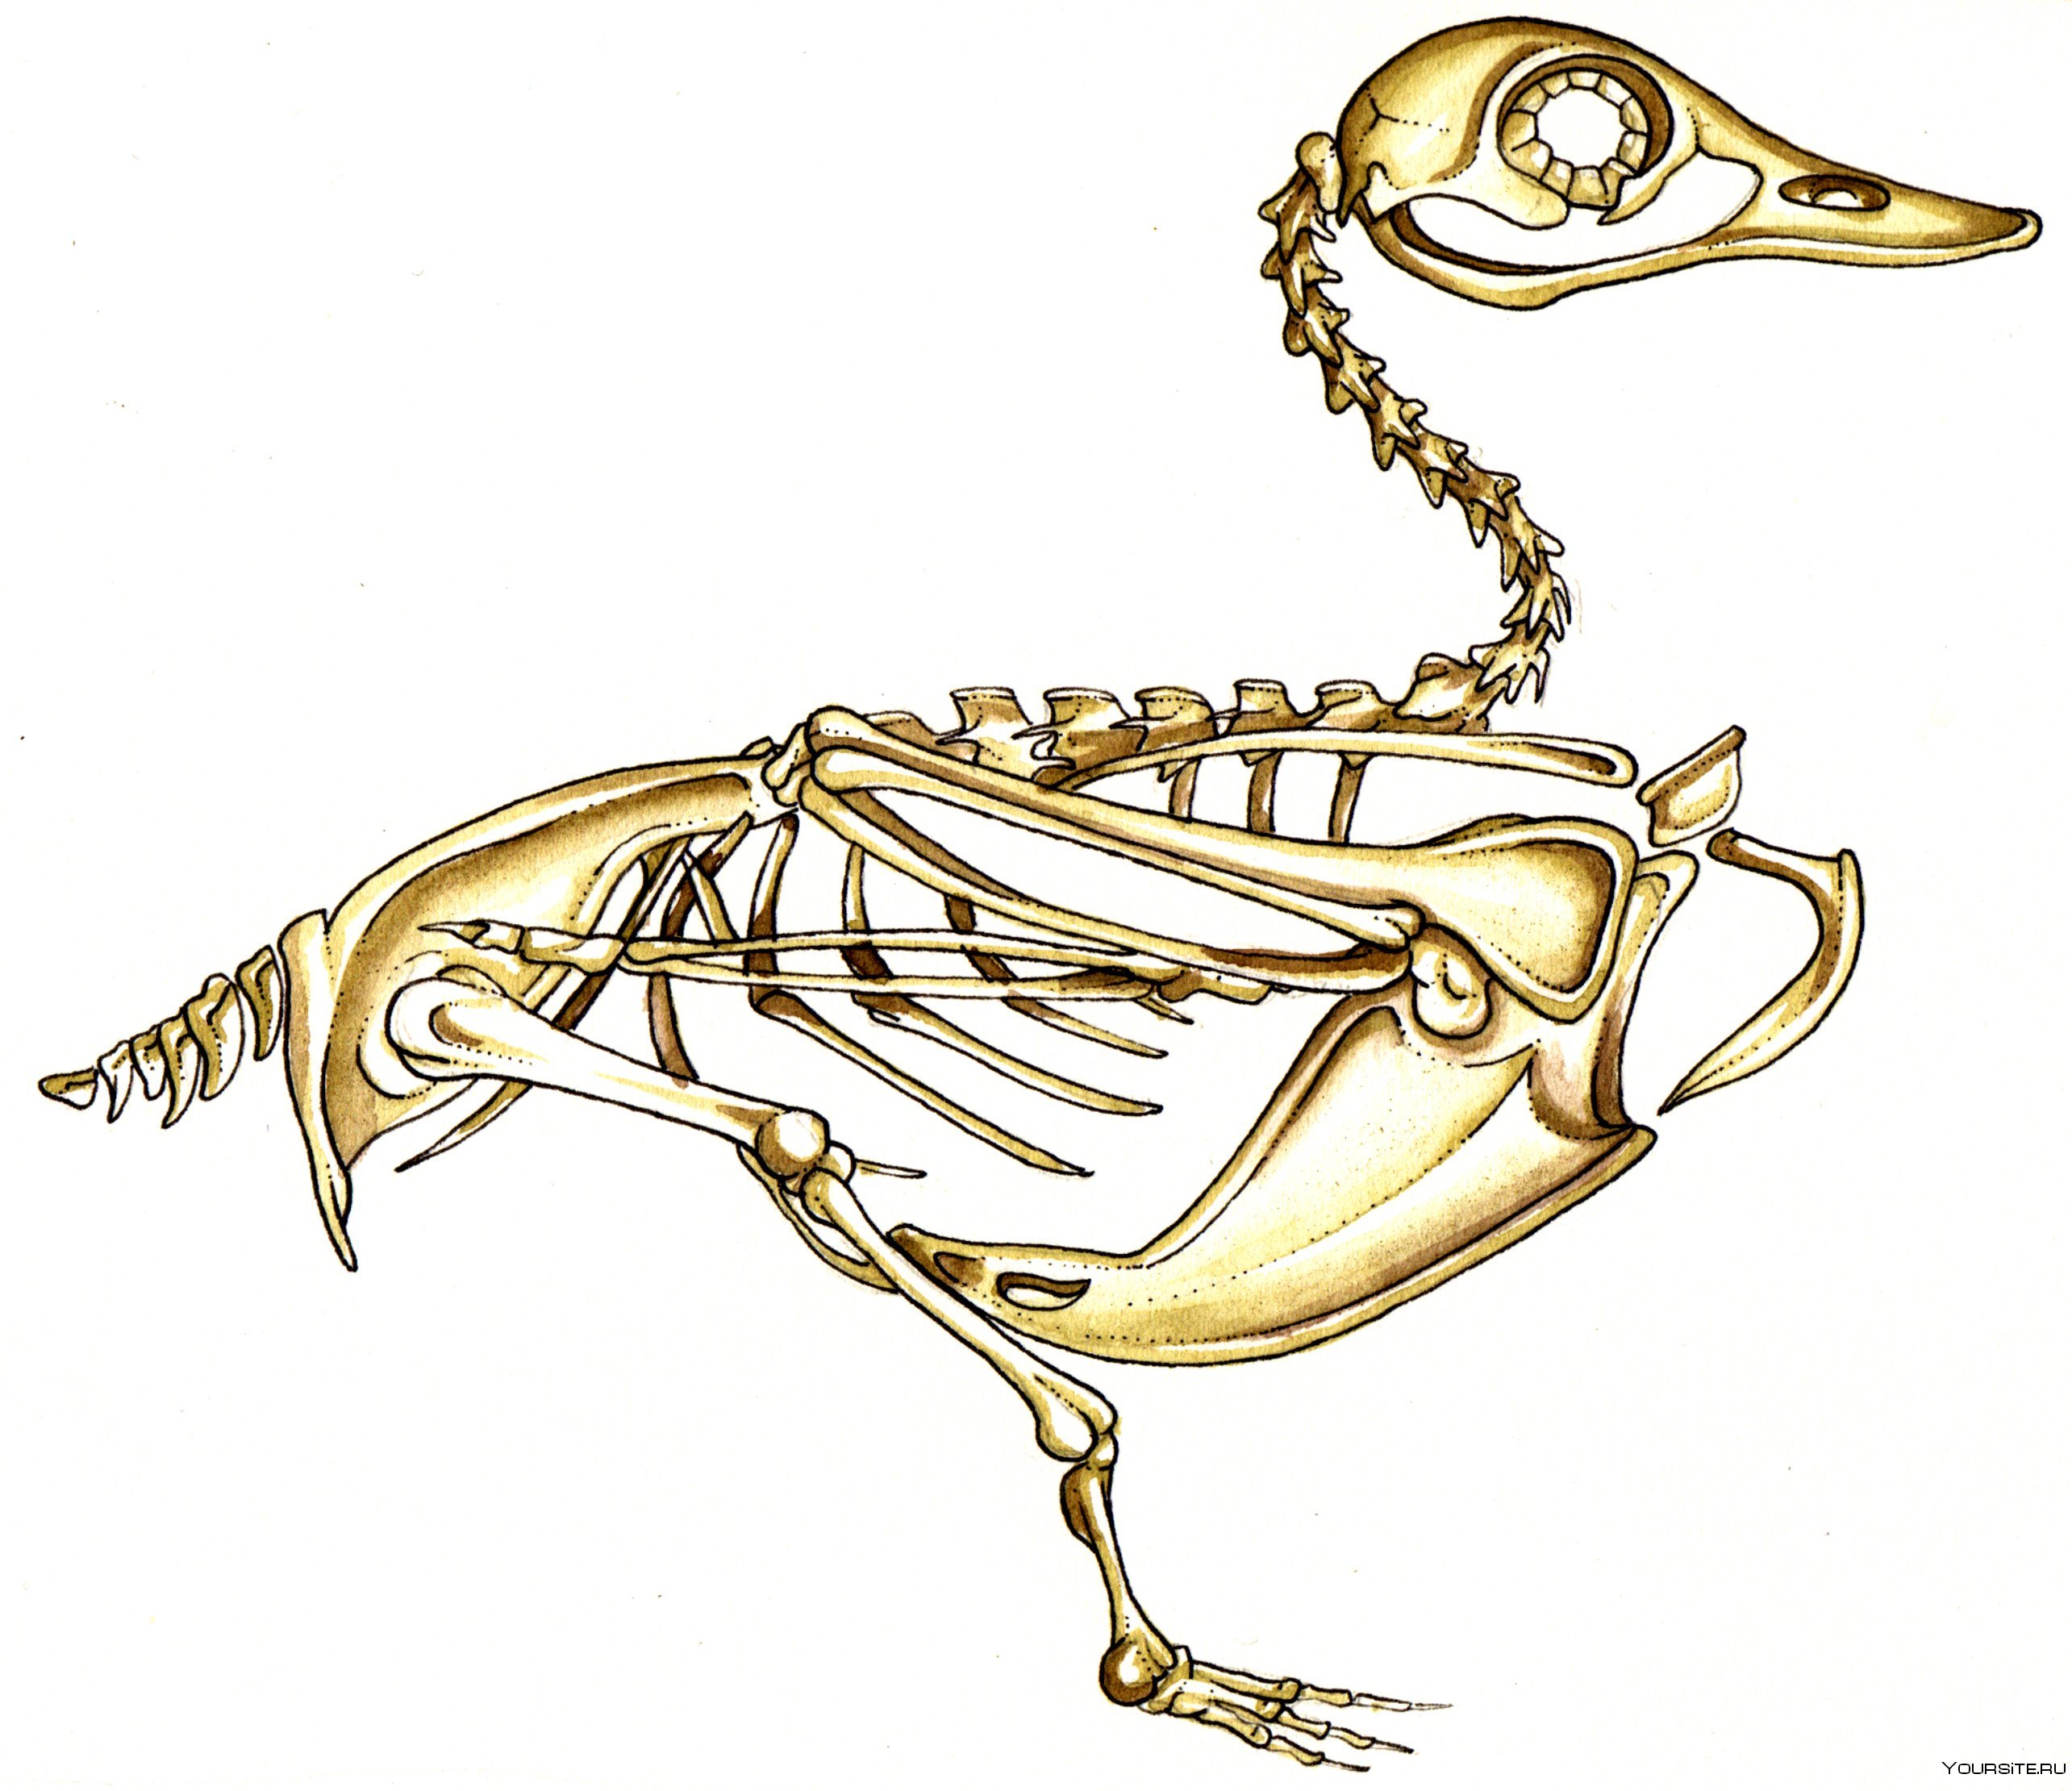 Скелет птиц приспособлен у птиц кости. Скелет кряквы утки. Строение скелета утки кряквы. Скелет птицы анатомия. Скелет утки.